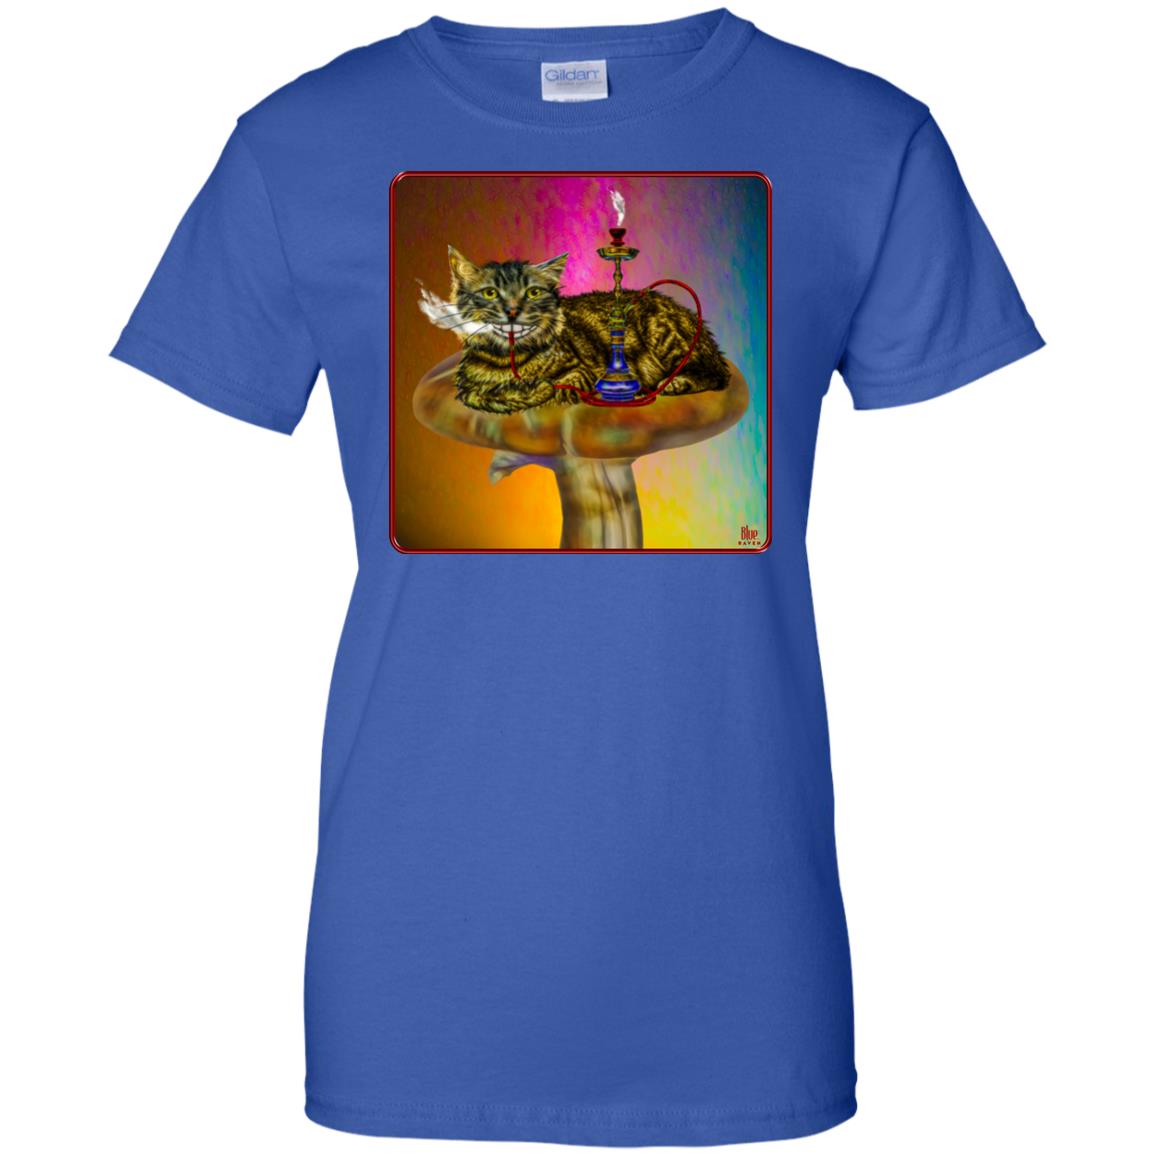 MAGIC MUSHROOM - Women's Relaxed Fit T-Shirt